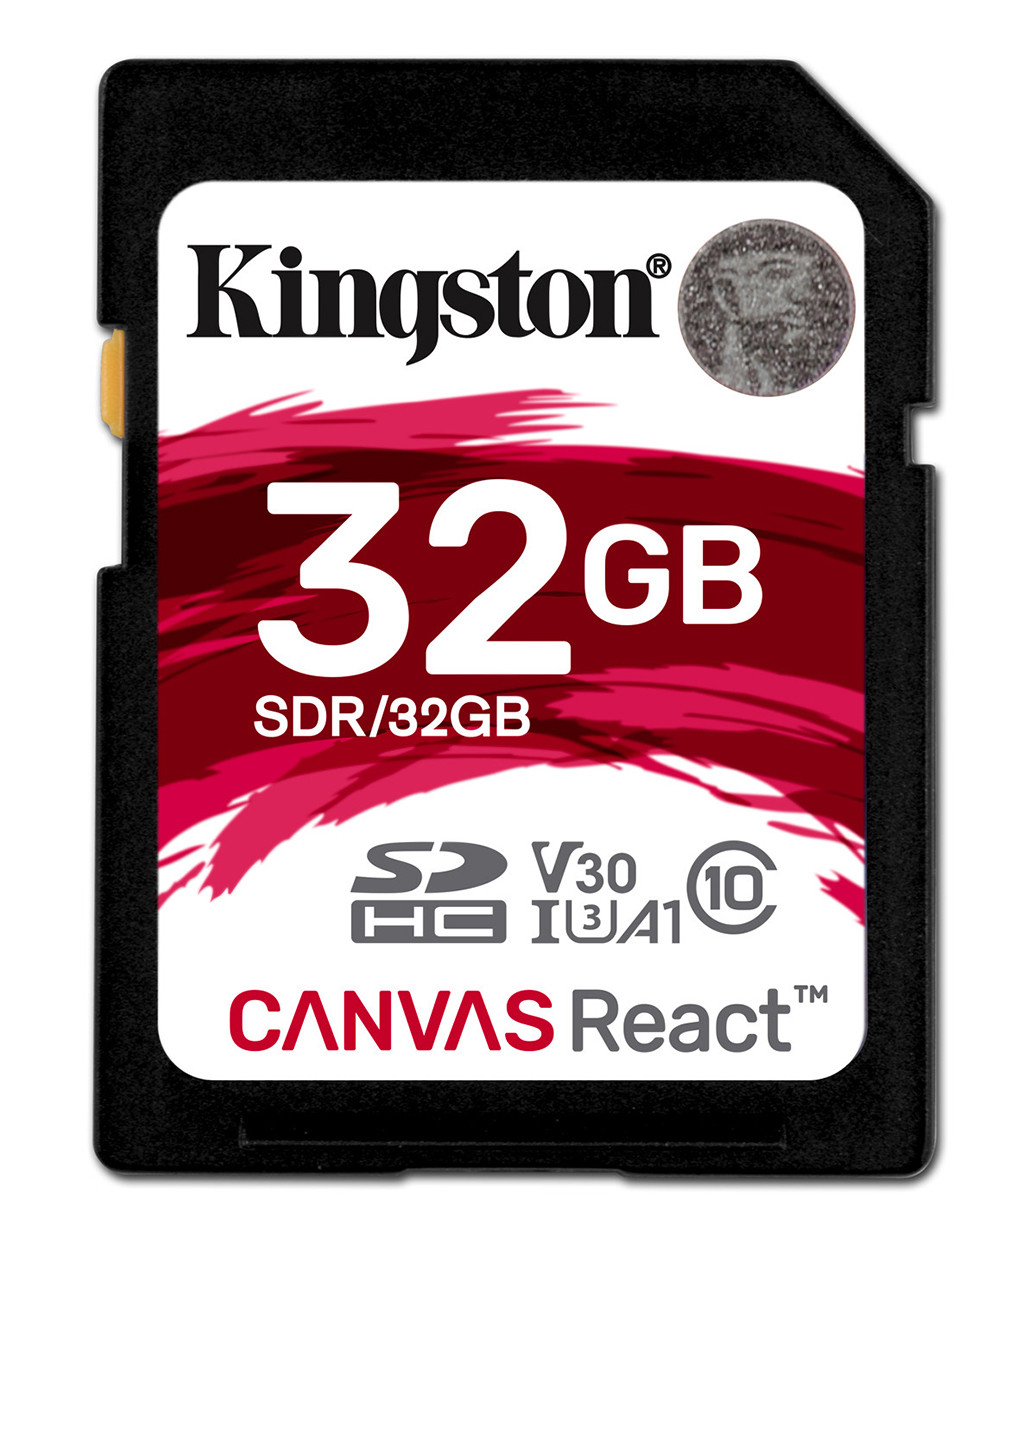 Карта памяти SDHC 32GB Canvas React C10 UHS-I U3 V30 (SDR/32GB) Kingston карта памяти kingston sdhc 32gb canvas react c10 uhs-i u3 v30 (sdr/32gb) (132572701)